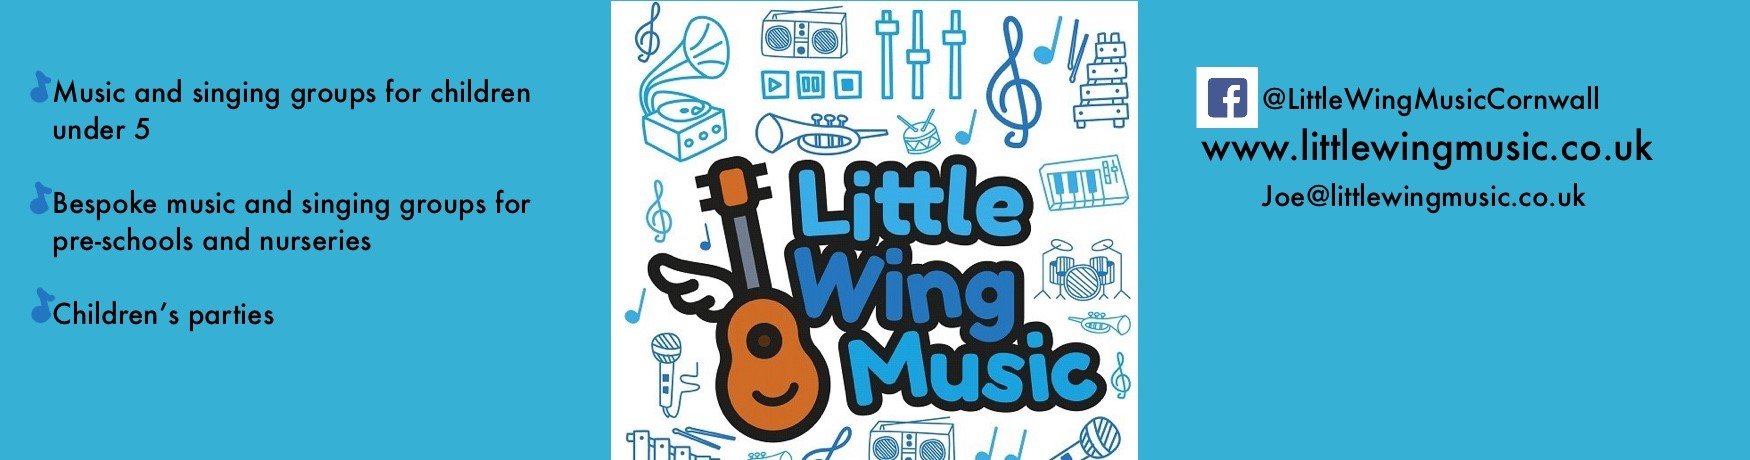 Little Wing music banner for Totsabout Oct 21.jpg